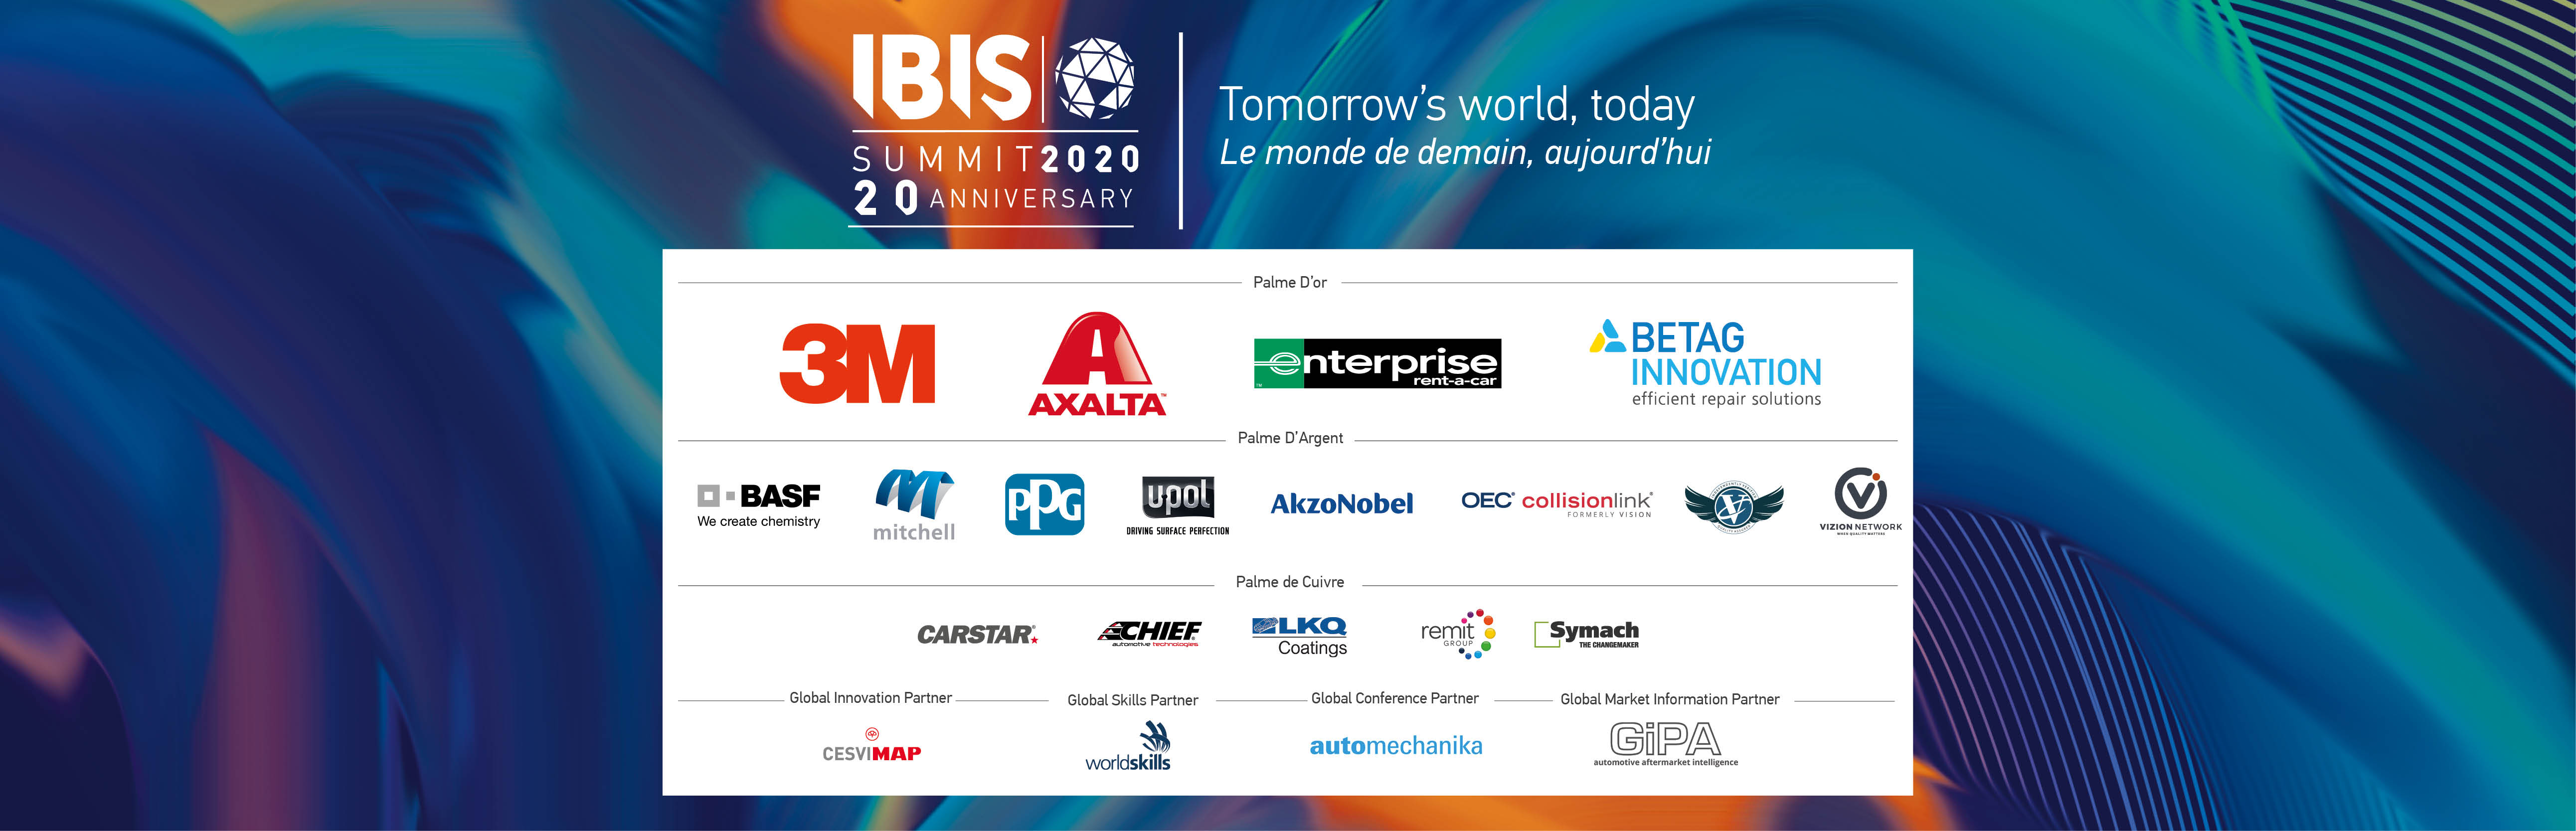 Ibis Homepage Banner 2 8 April Ibis Worldwide